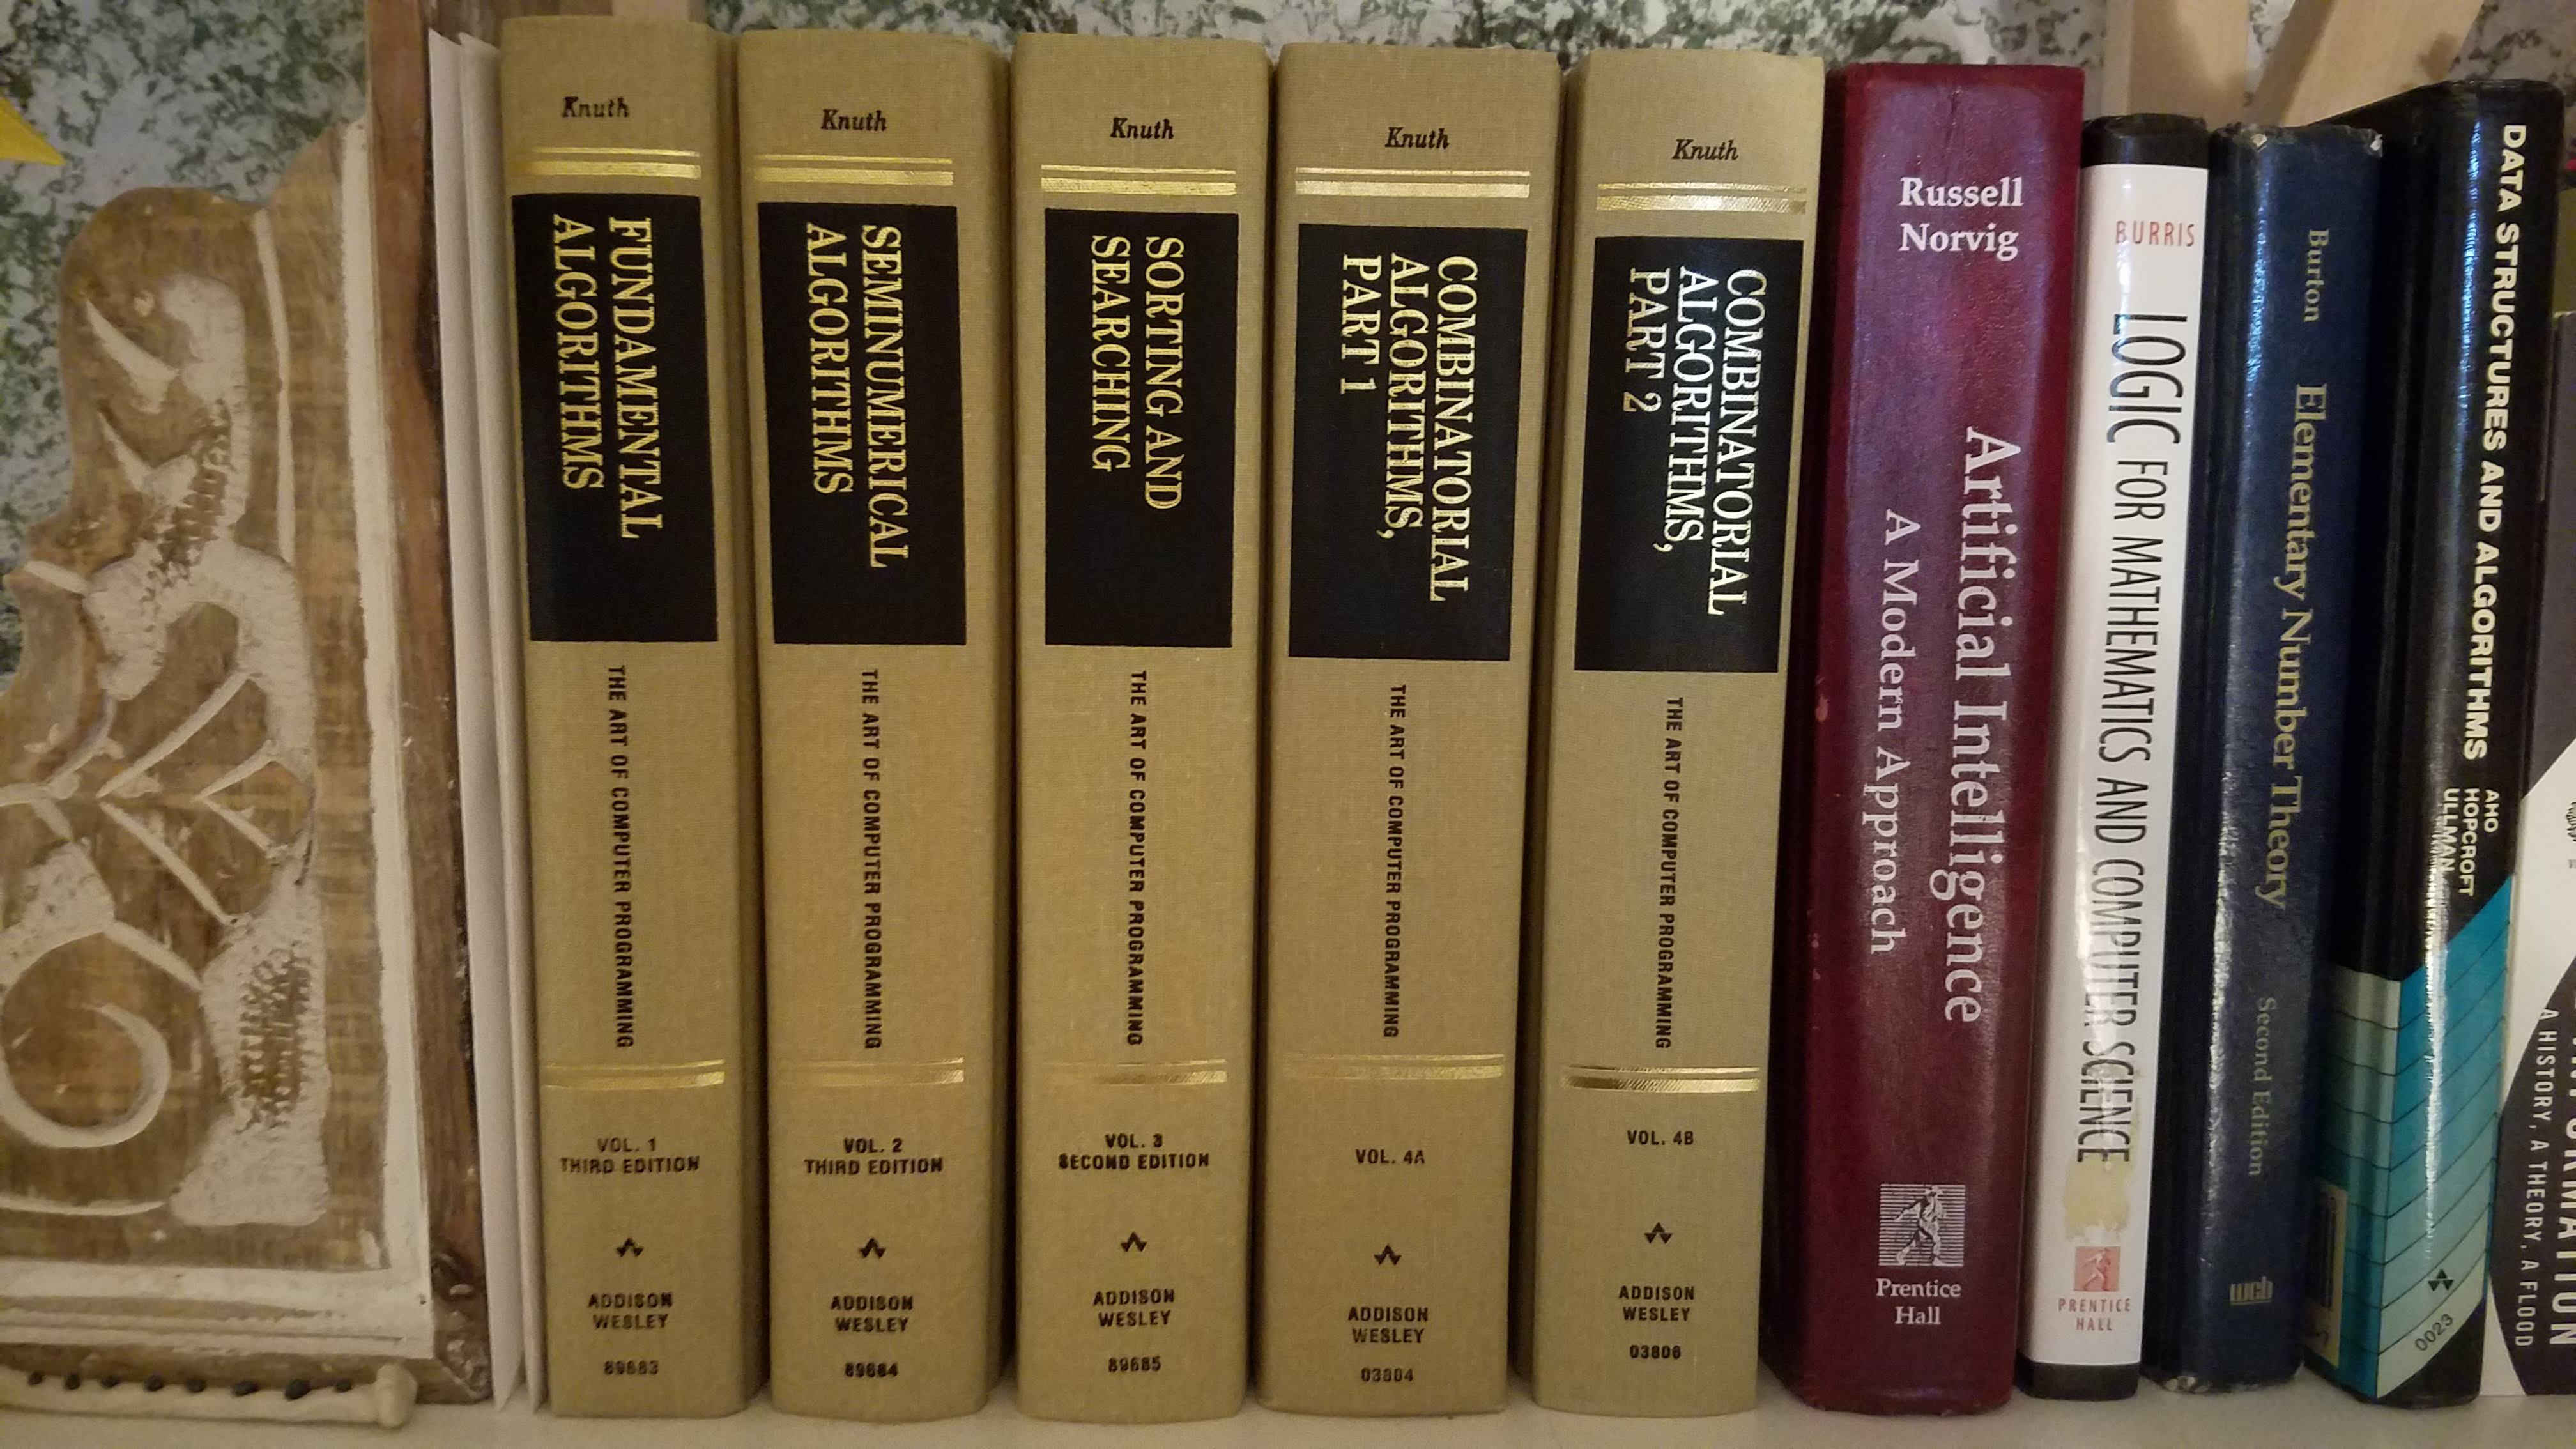 TAOCP Volumes 1,2,3,4a,4b